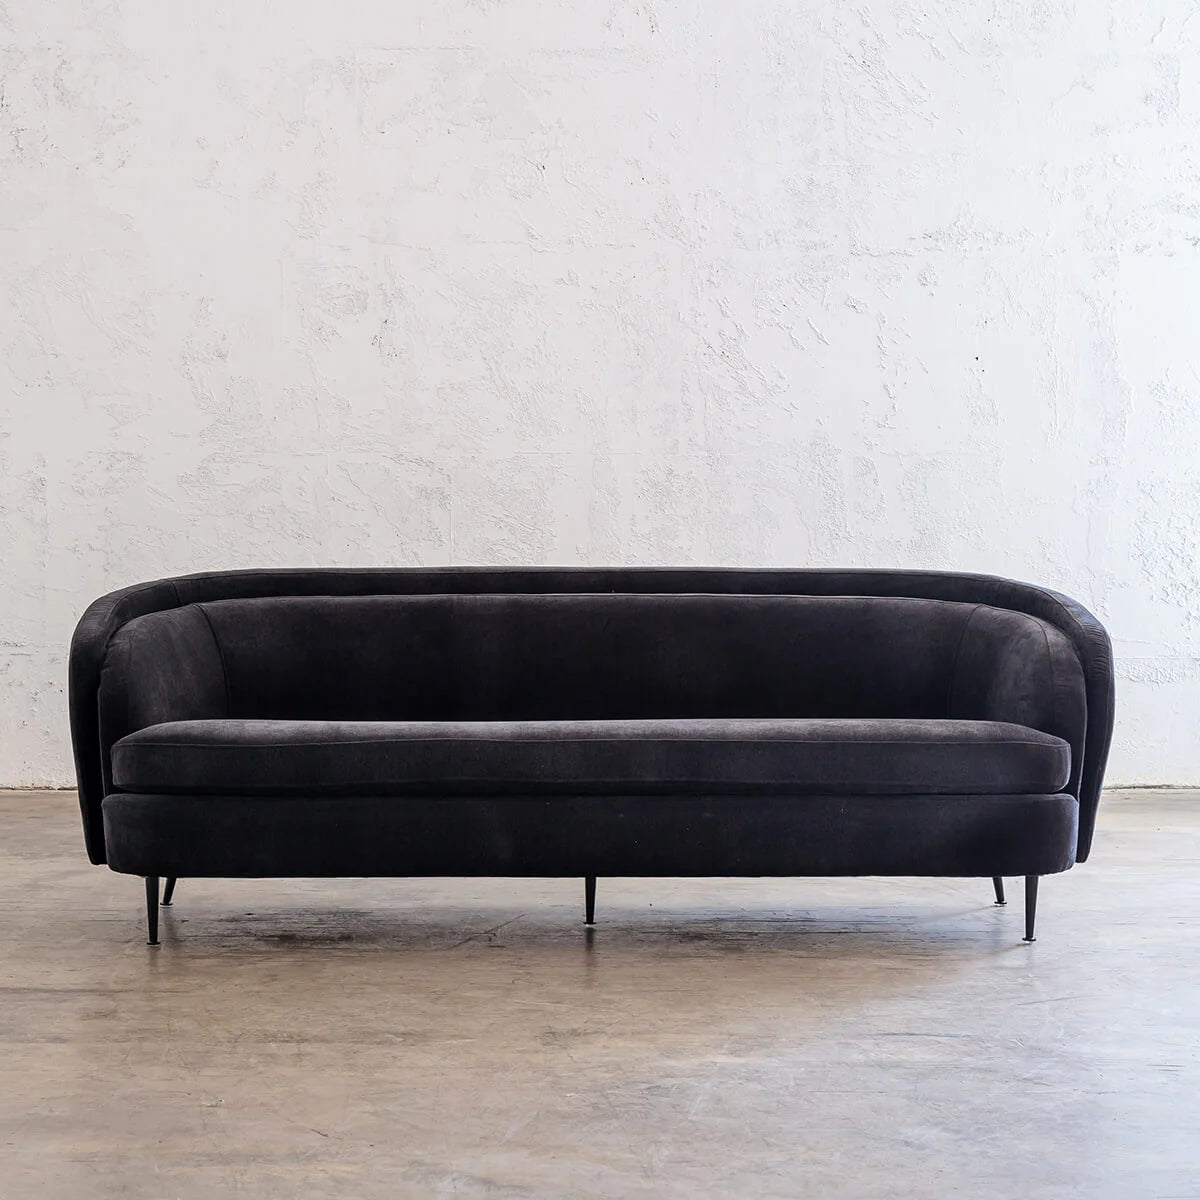 3 Seater Curve Luxurious Sofa Black